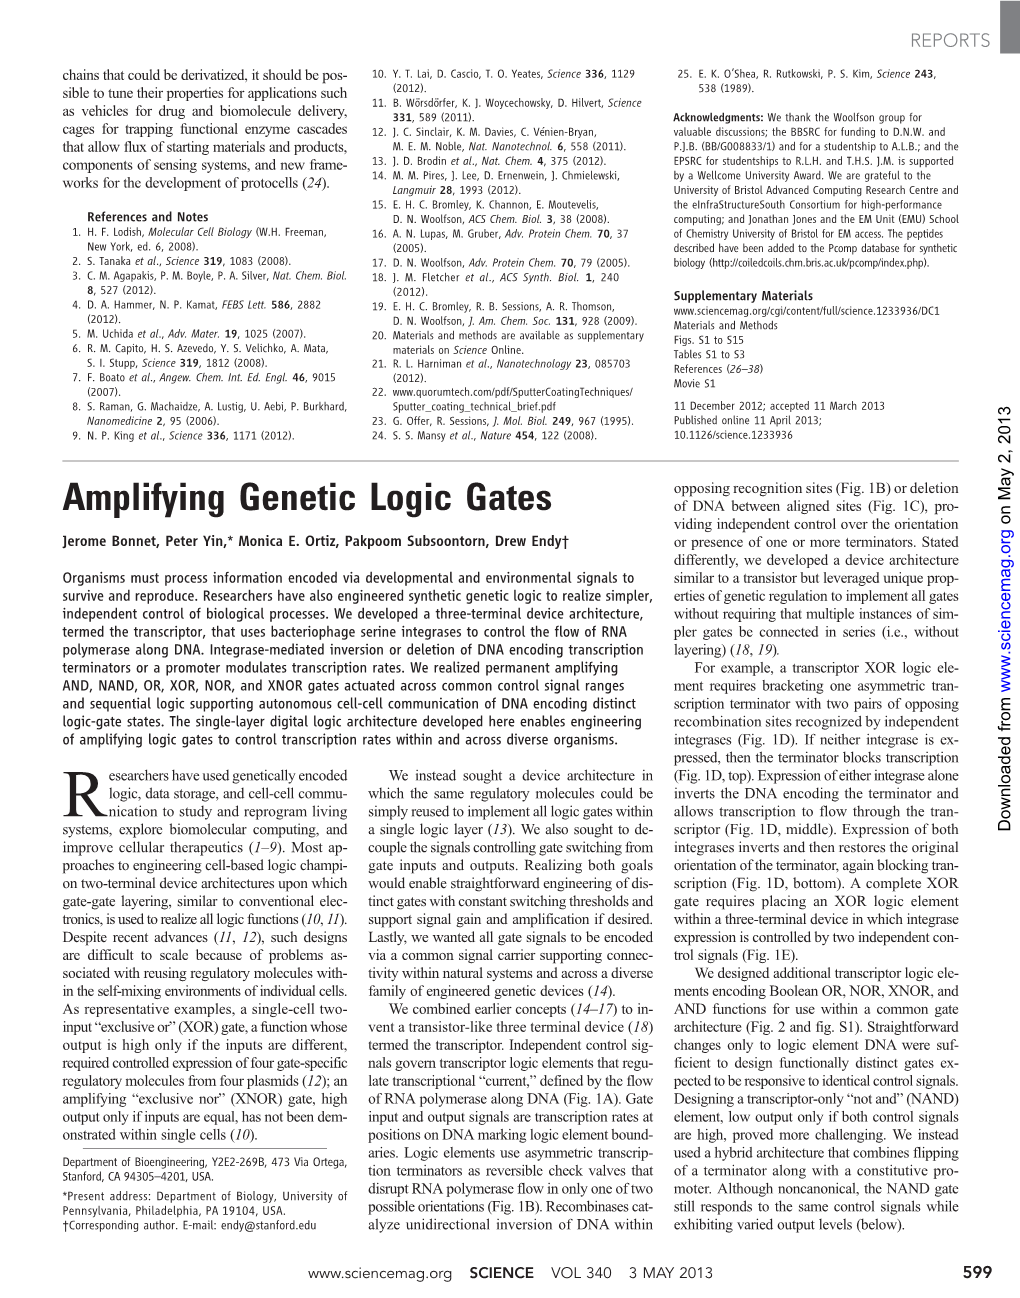 Amplifying Genetic Logic Gates of DNA Between Aligned Sites (Fig